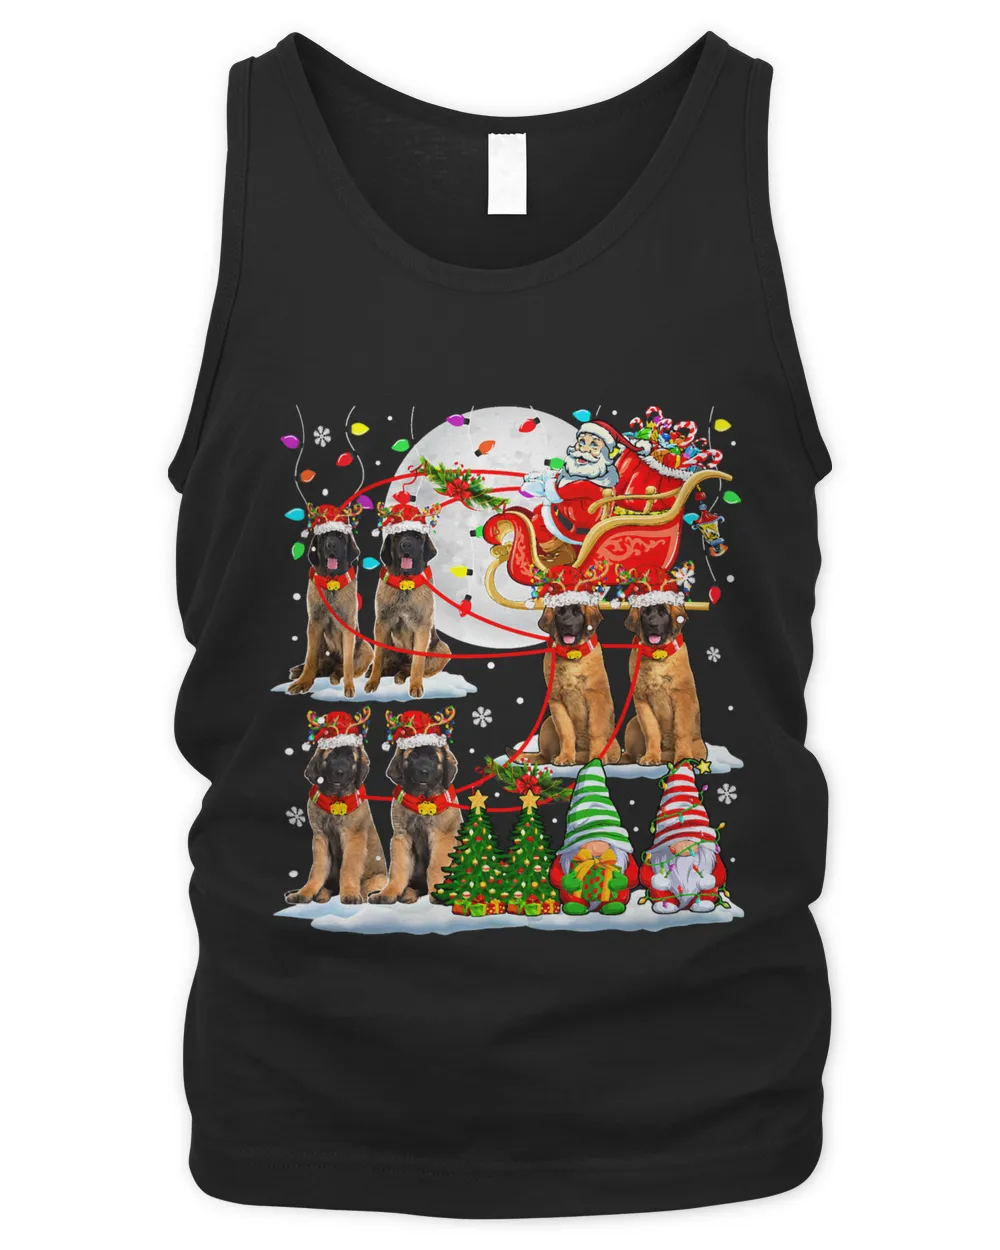 Santa Sleigh Reindeer Leonbergers Xmas Costume Family Kids 3